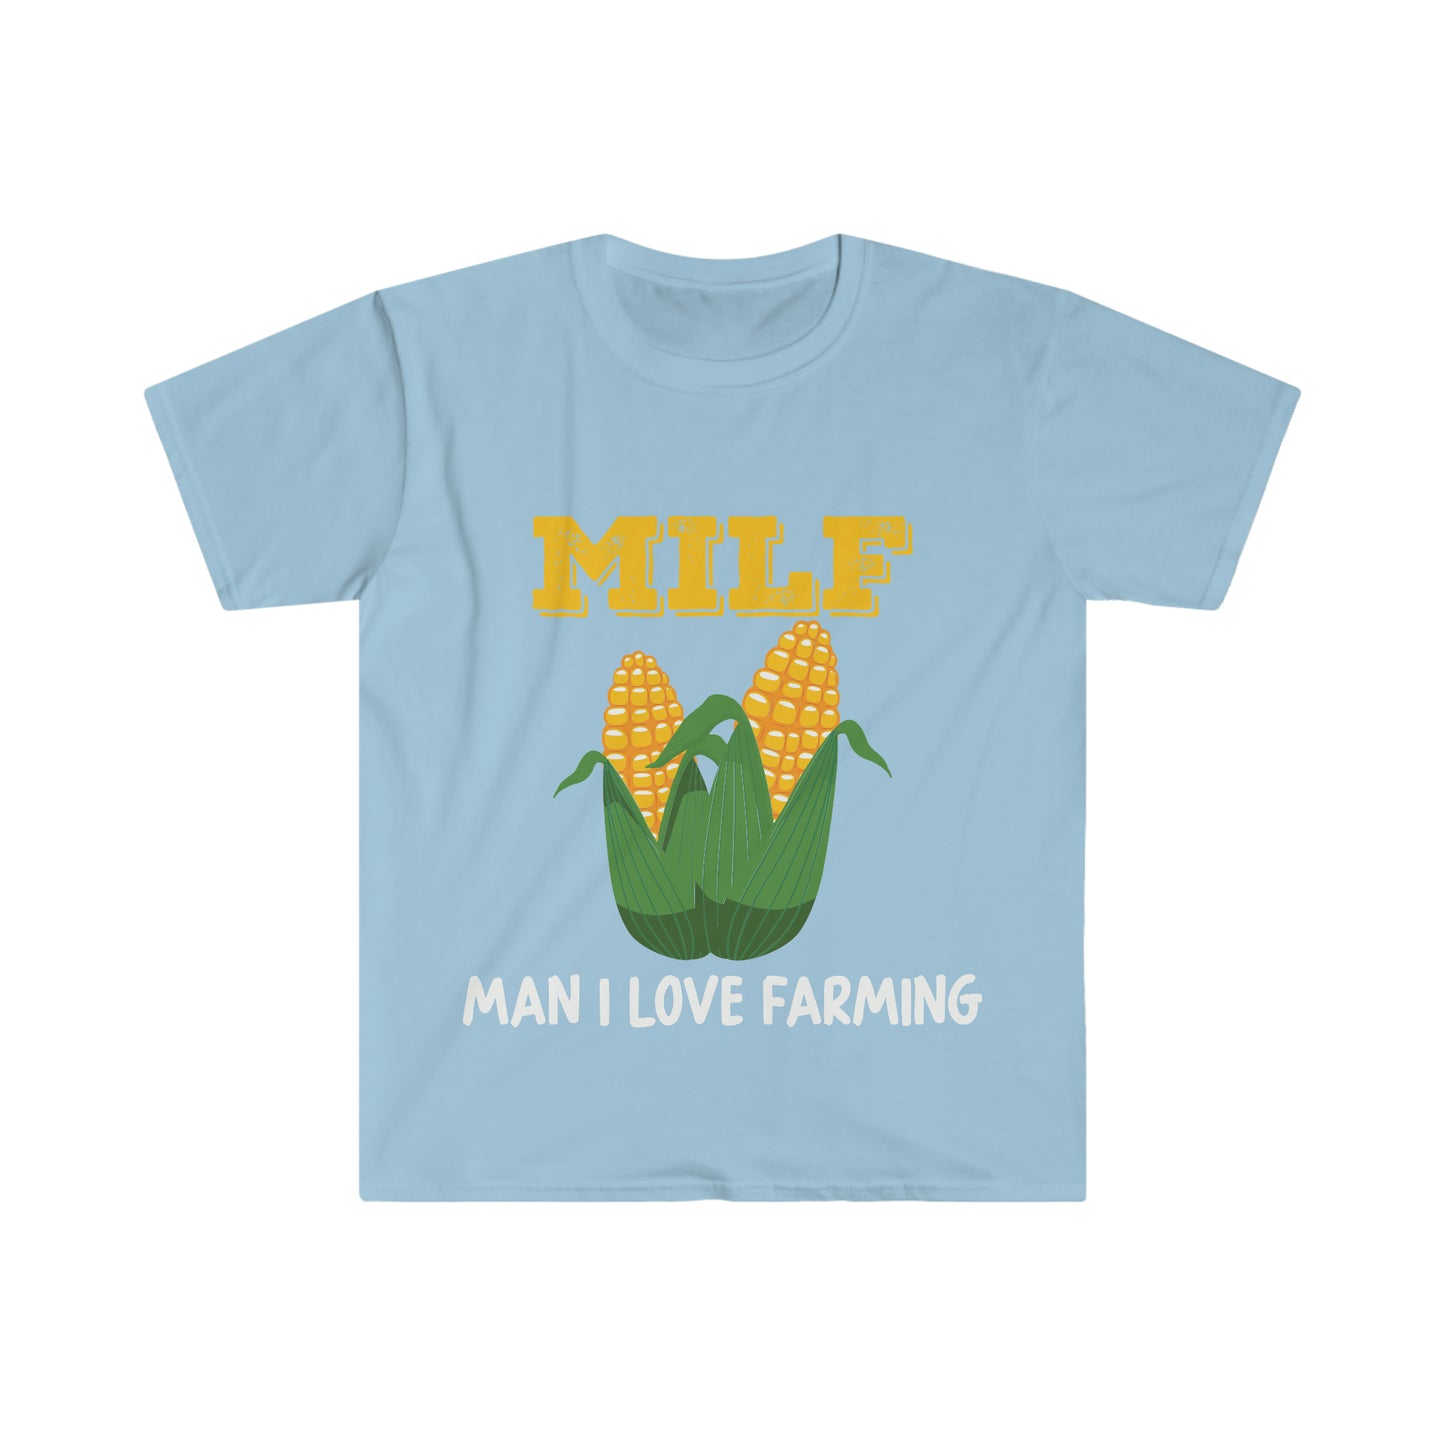 MILF - Man I Love Farming T-Shirt